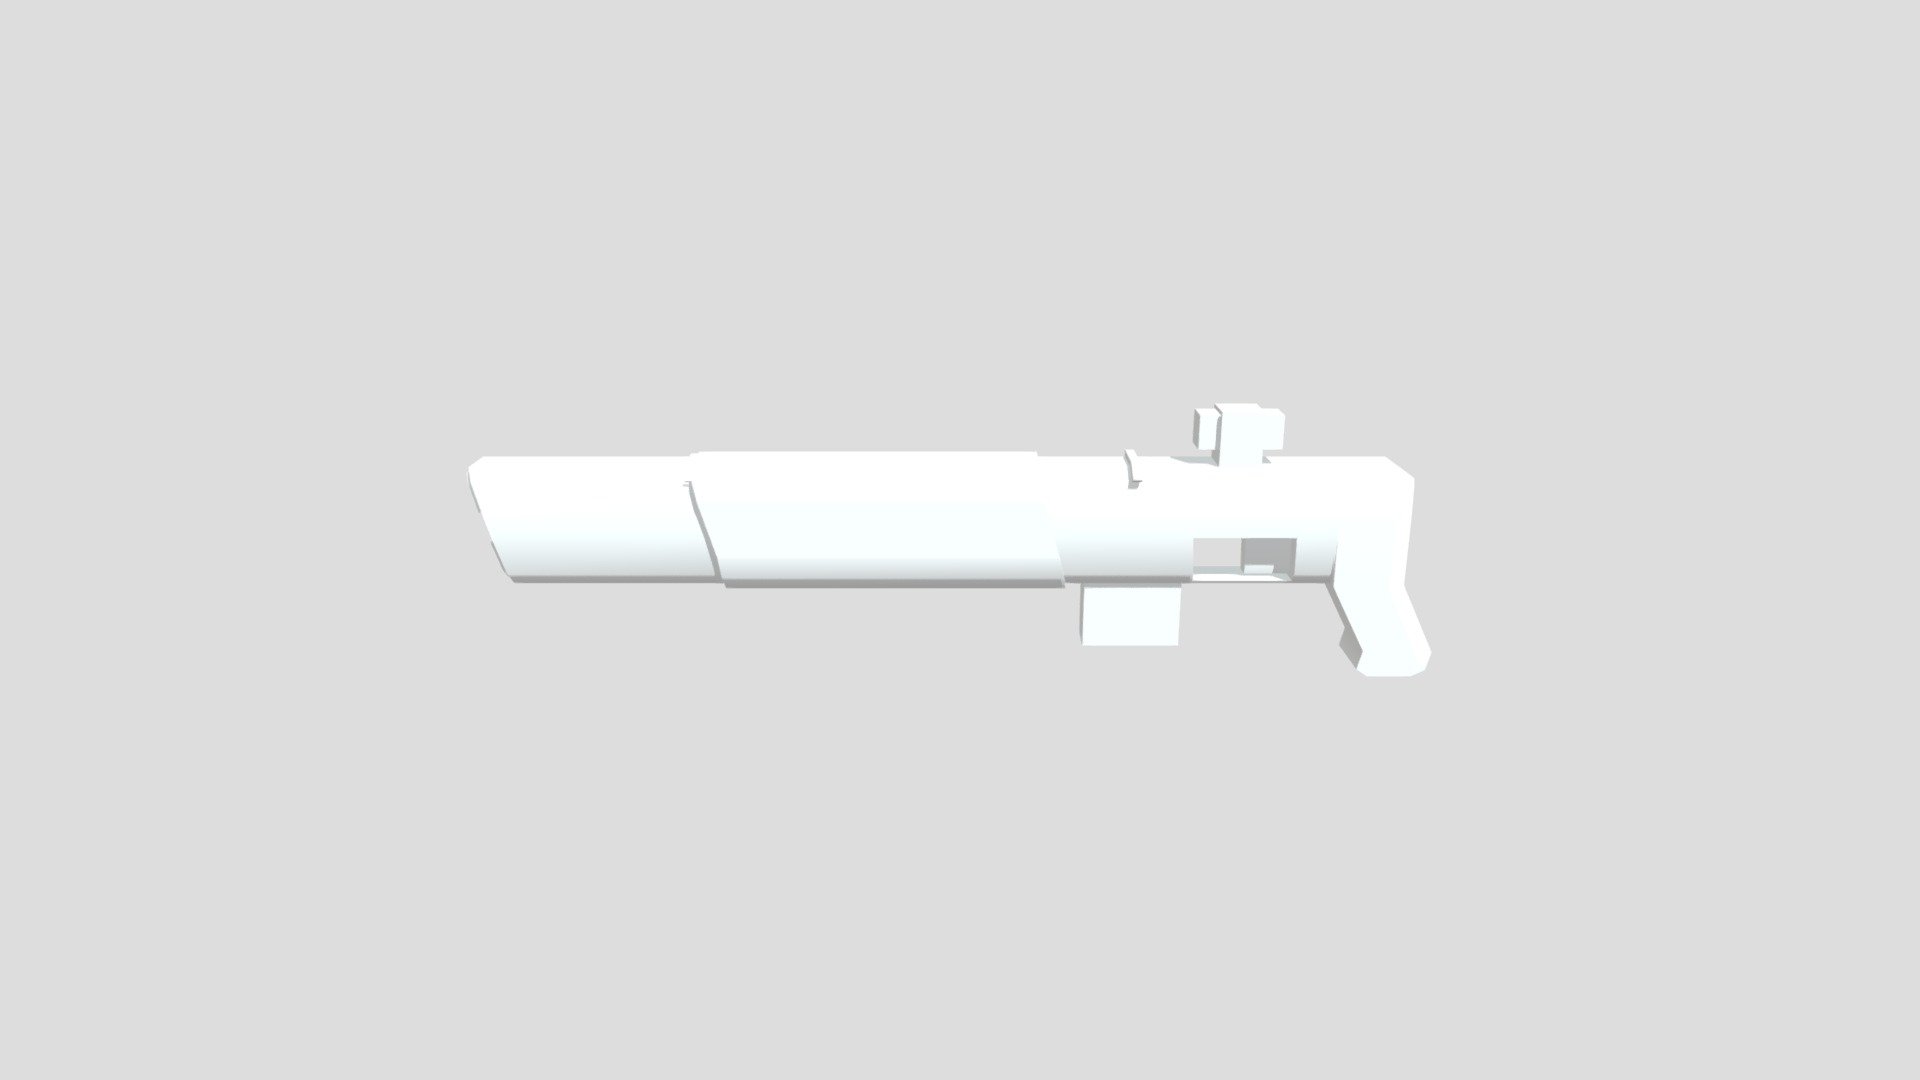 Shotgun untextured - 3D model by Cemh15 [86b019b] - Sketchfab